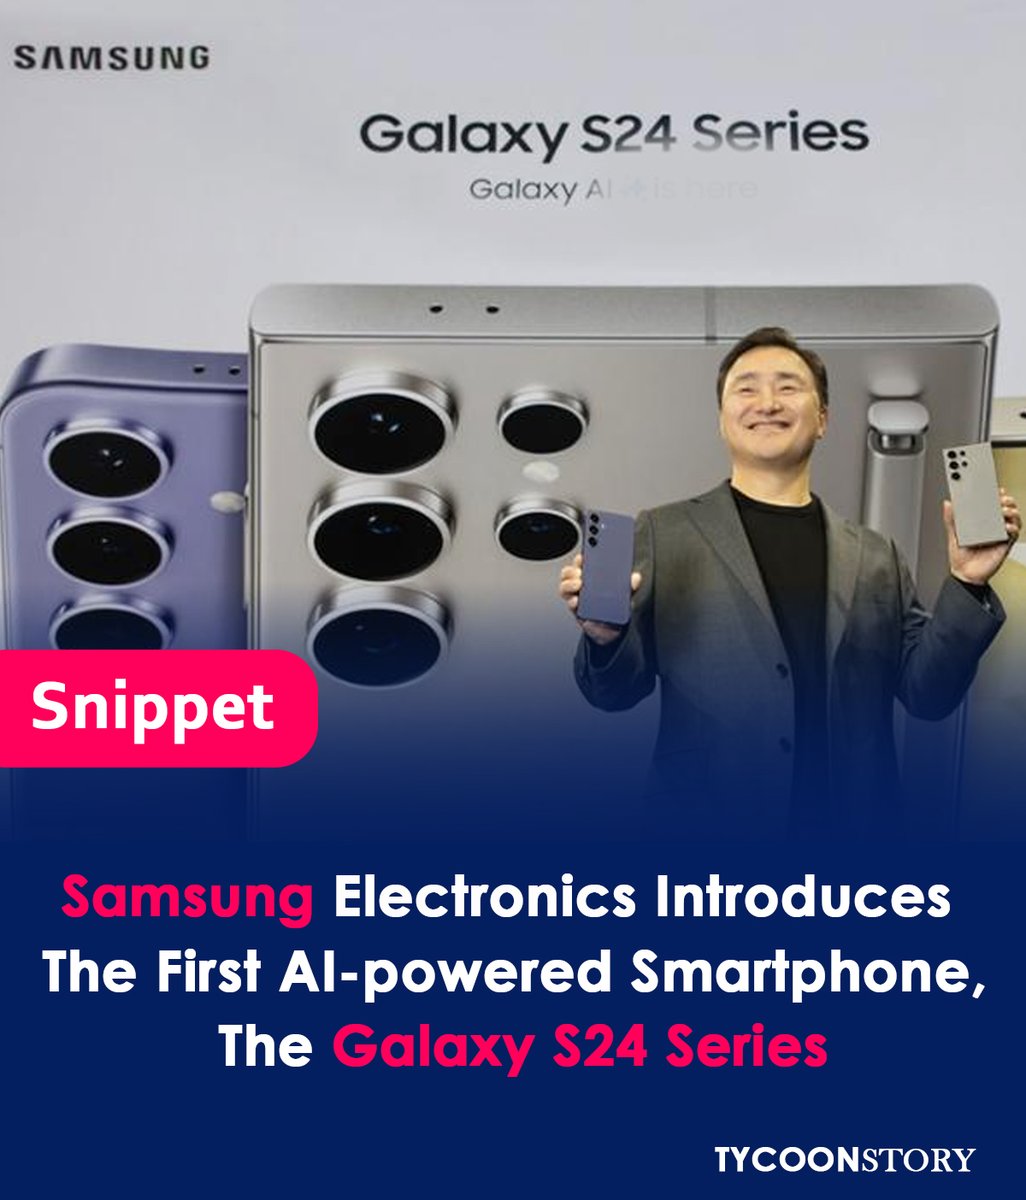 The First Smartphone With Ai Technology Is Unveiled By Samsung.

#SamsungAI #AIpoweredSmartphone #SmartphoneInnovation #FutureTech #SamsungRevolution #ArtificialIntelligence
#TechBreakthrough #InnovationInMobile #NextGenSmartphone @Samsung 

tycoonstory.com